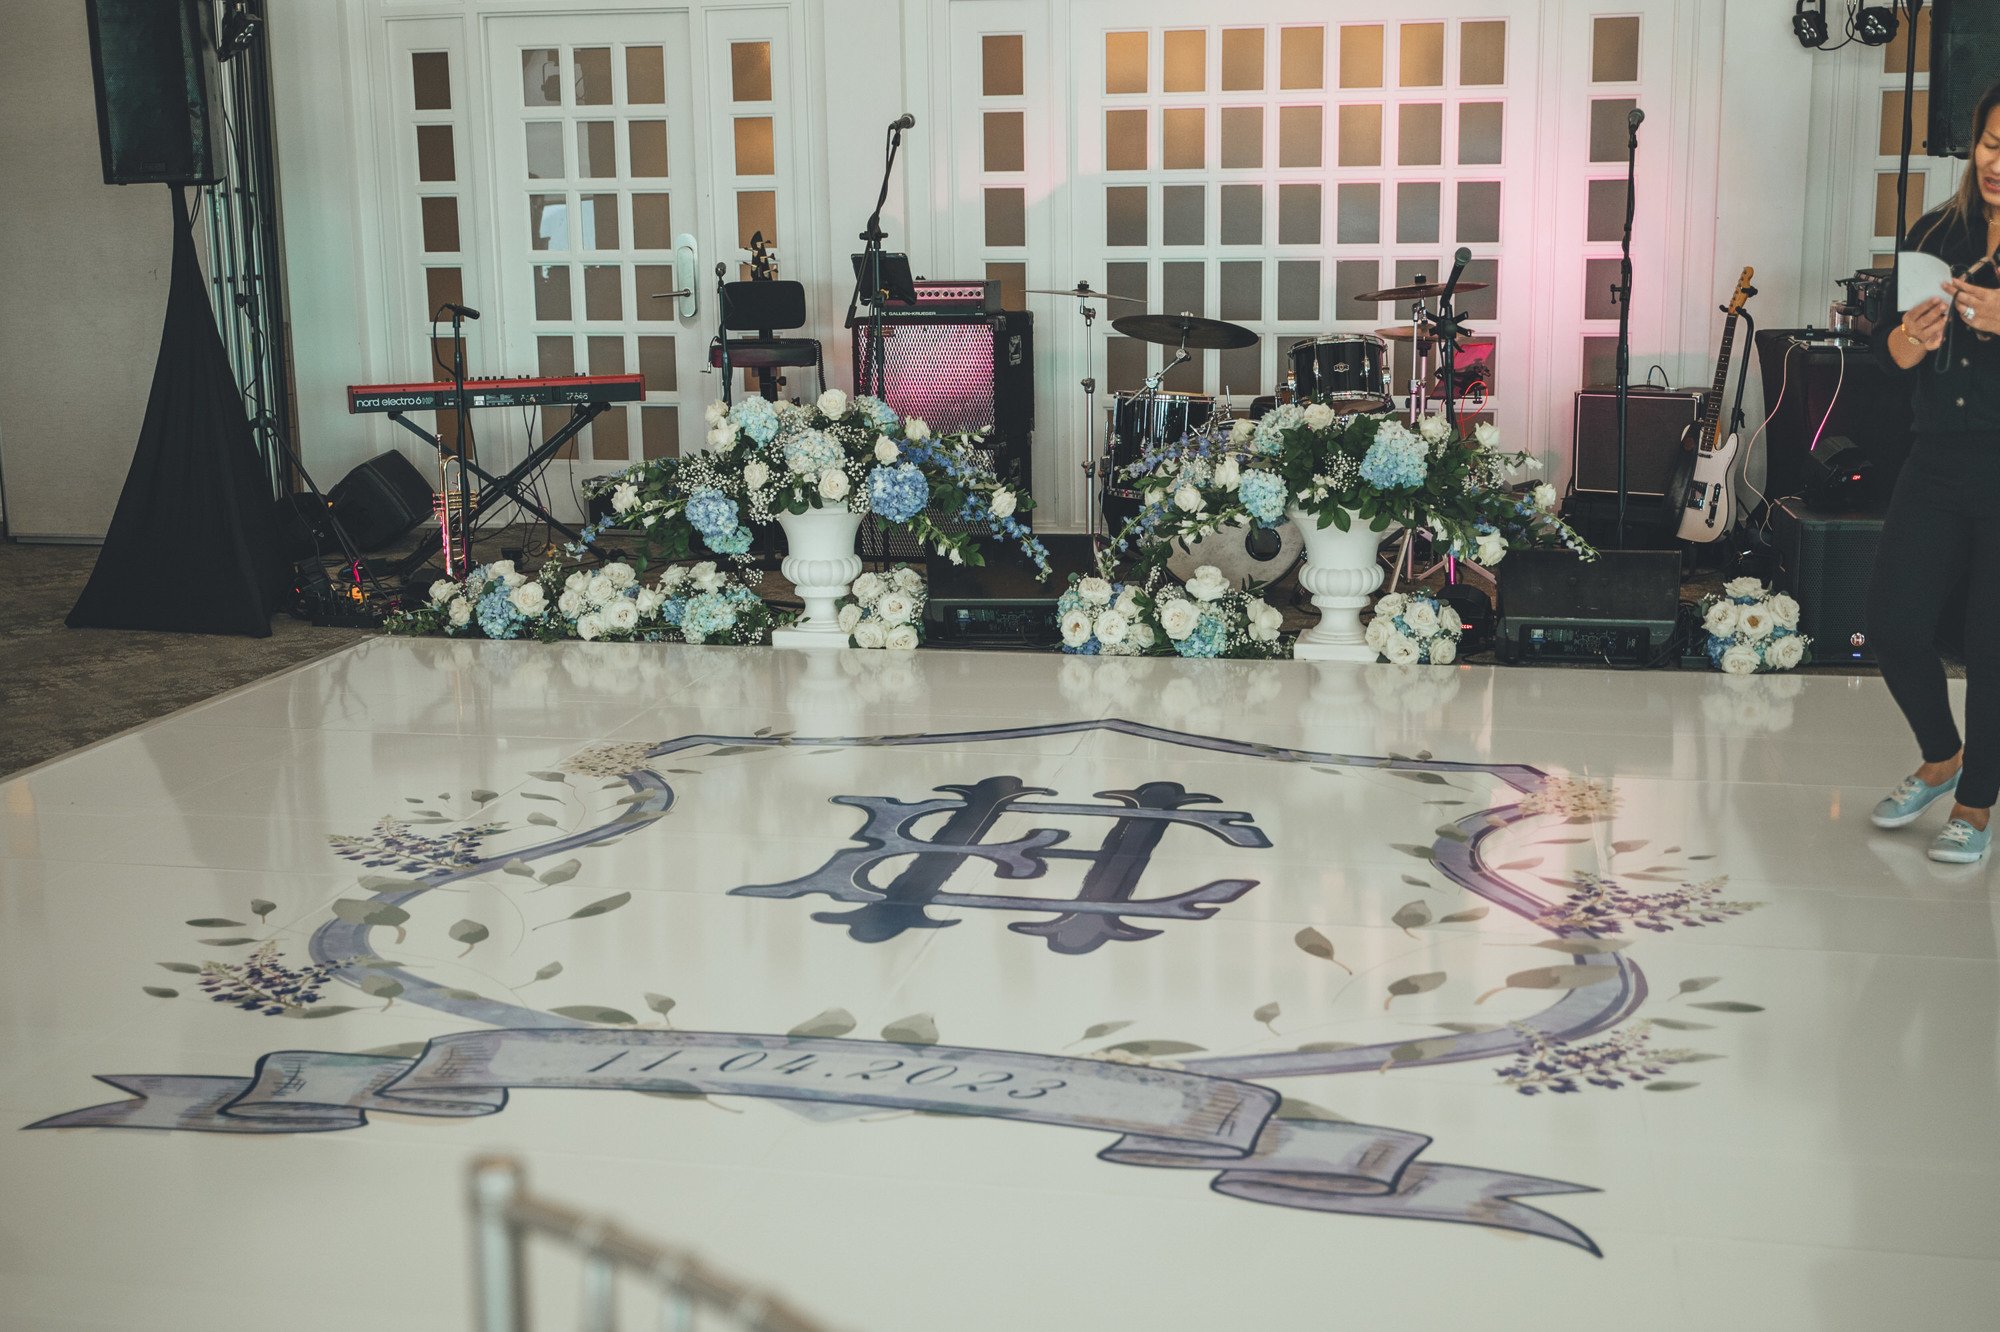 Bow Tie Photo & Video wedding reception decor at the lodge & club 2.jpg